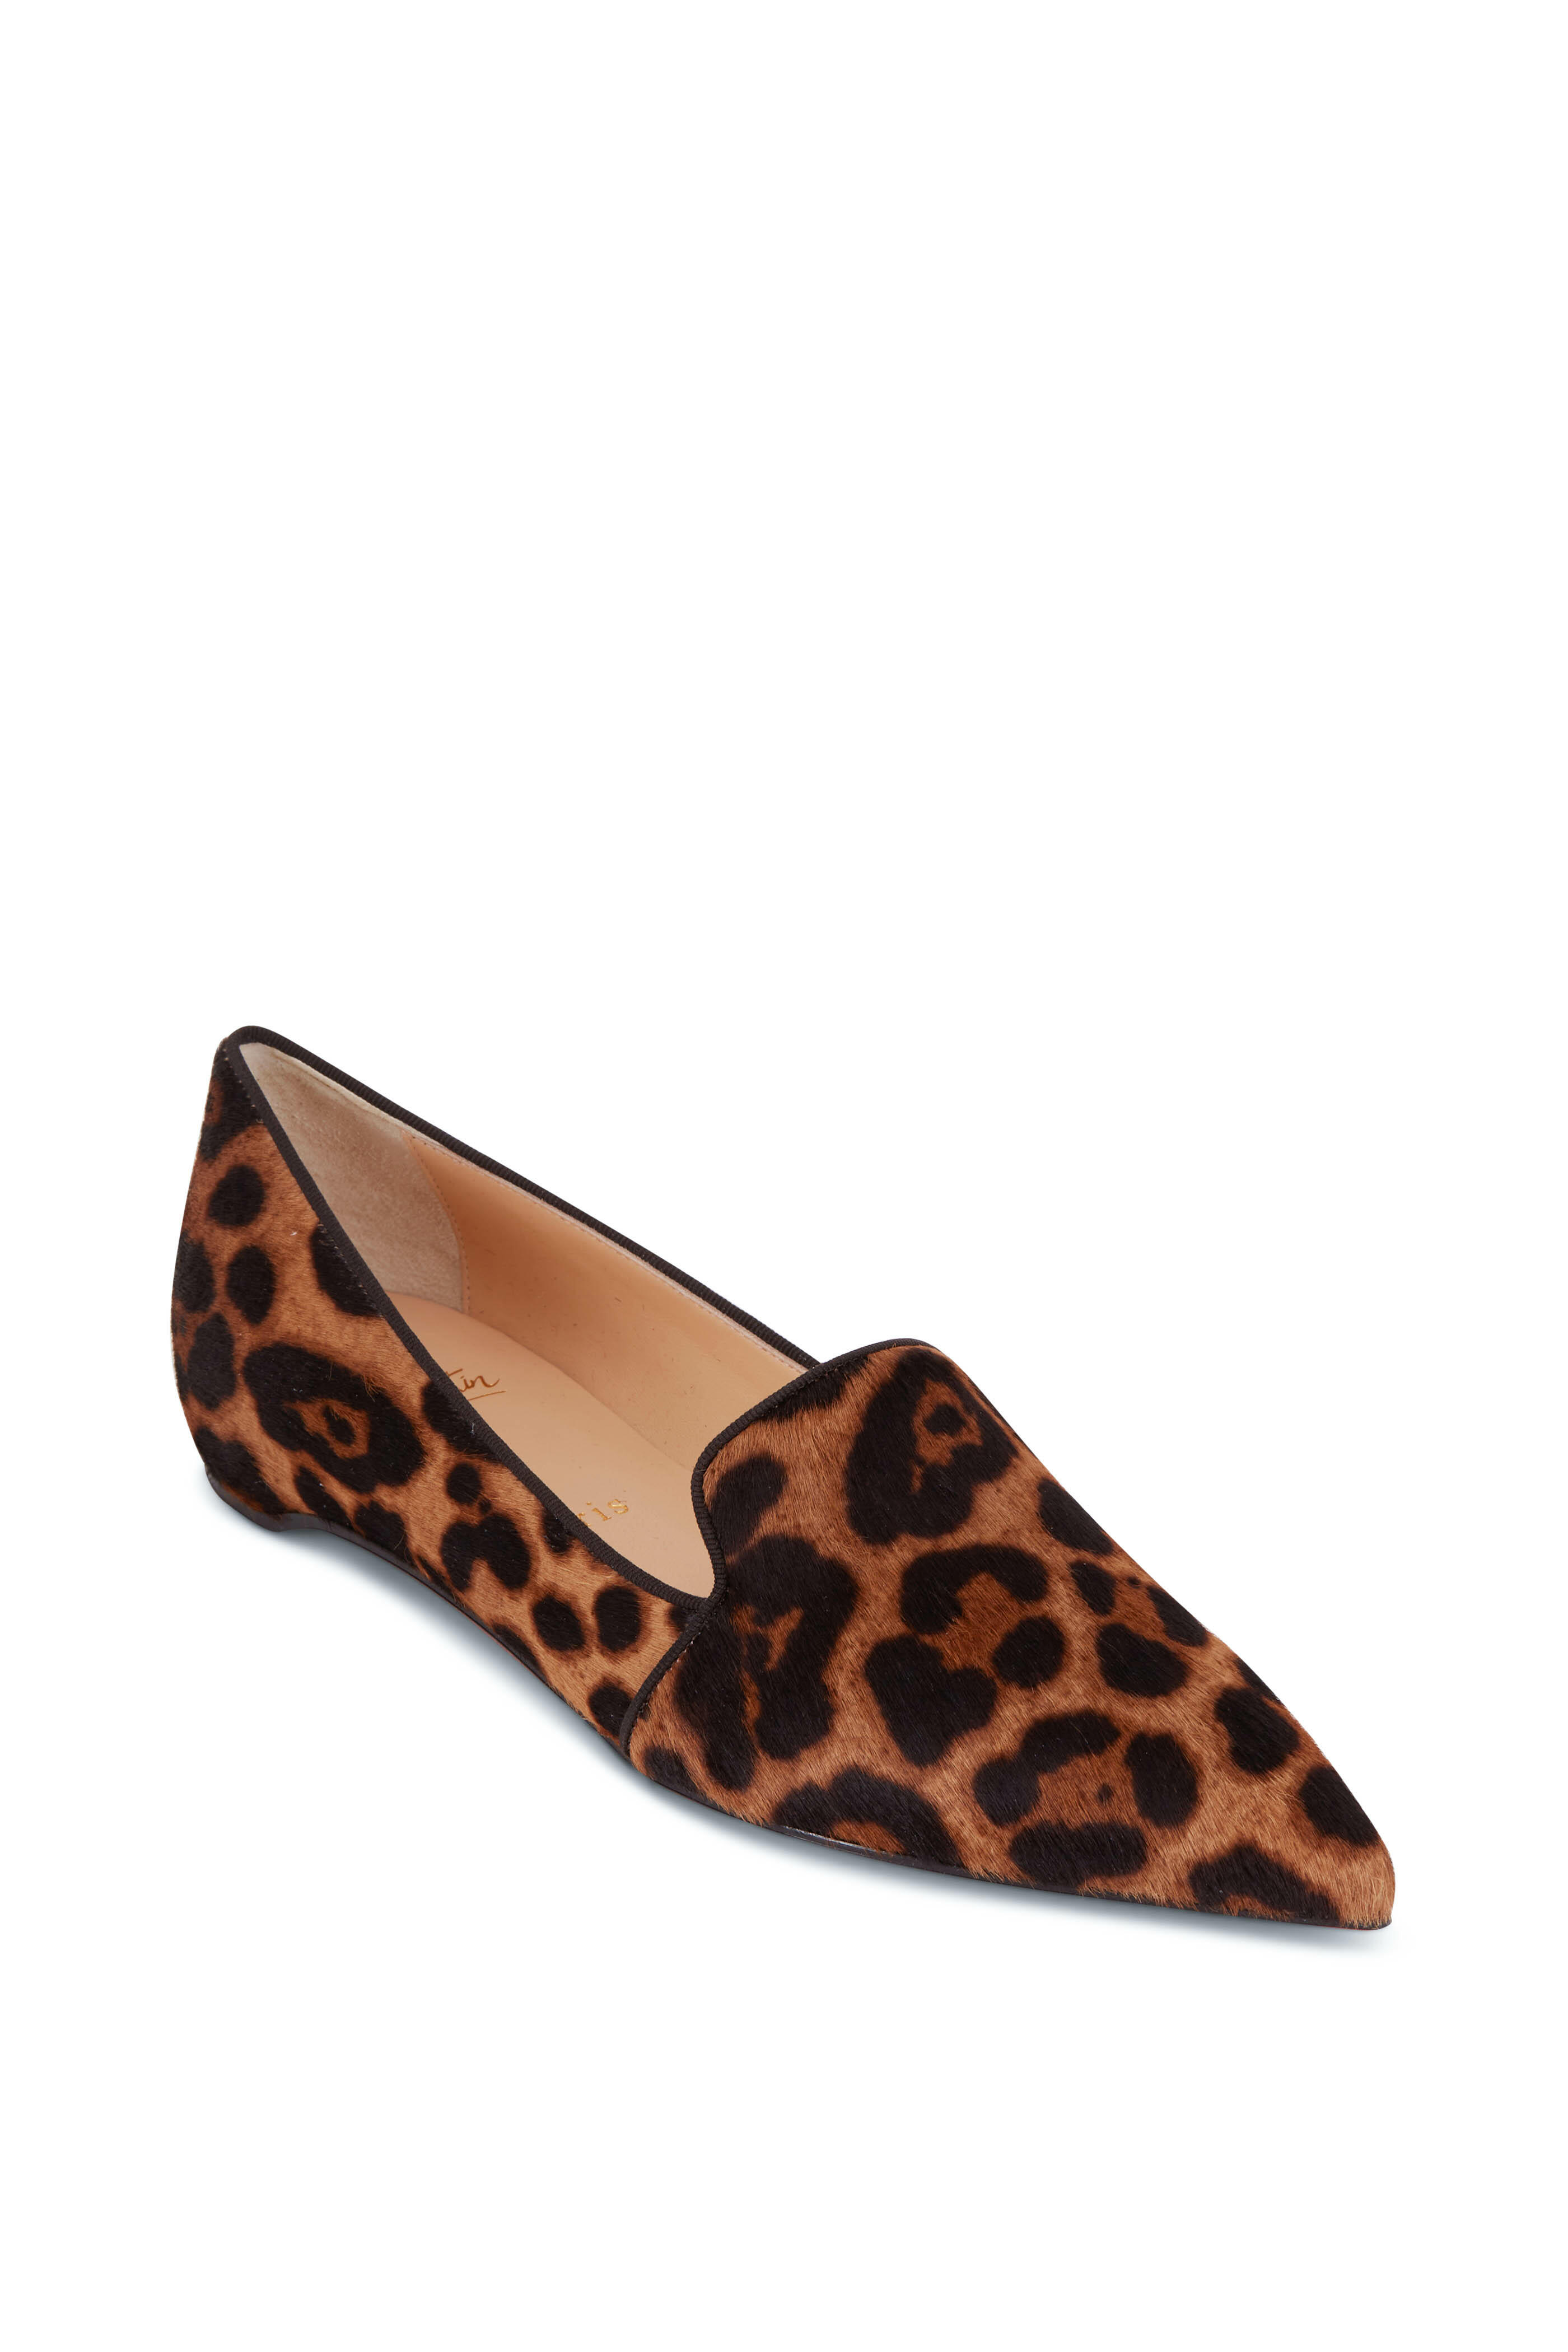 Christian Louboutin - Leopard Flat Loafer